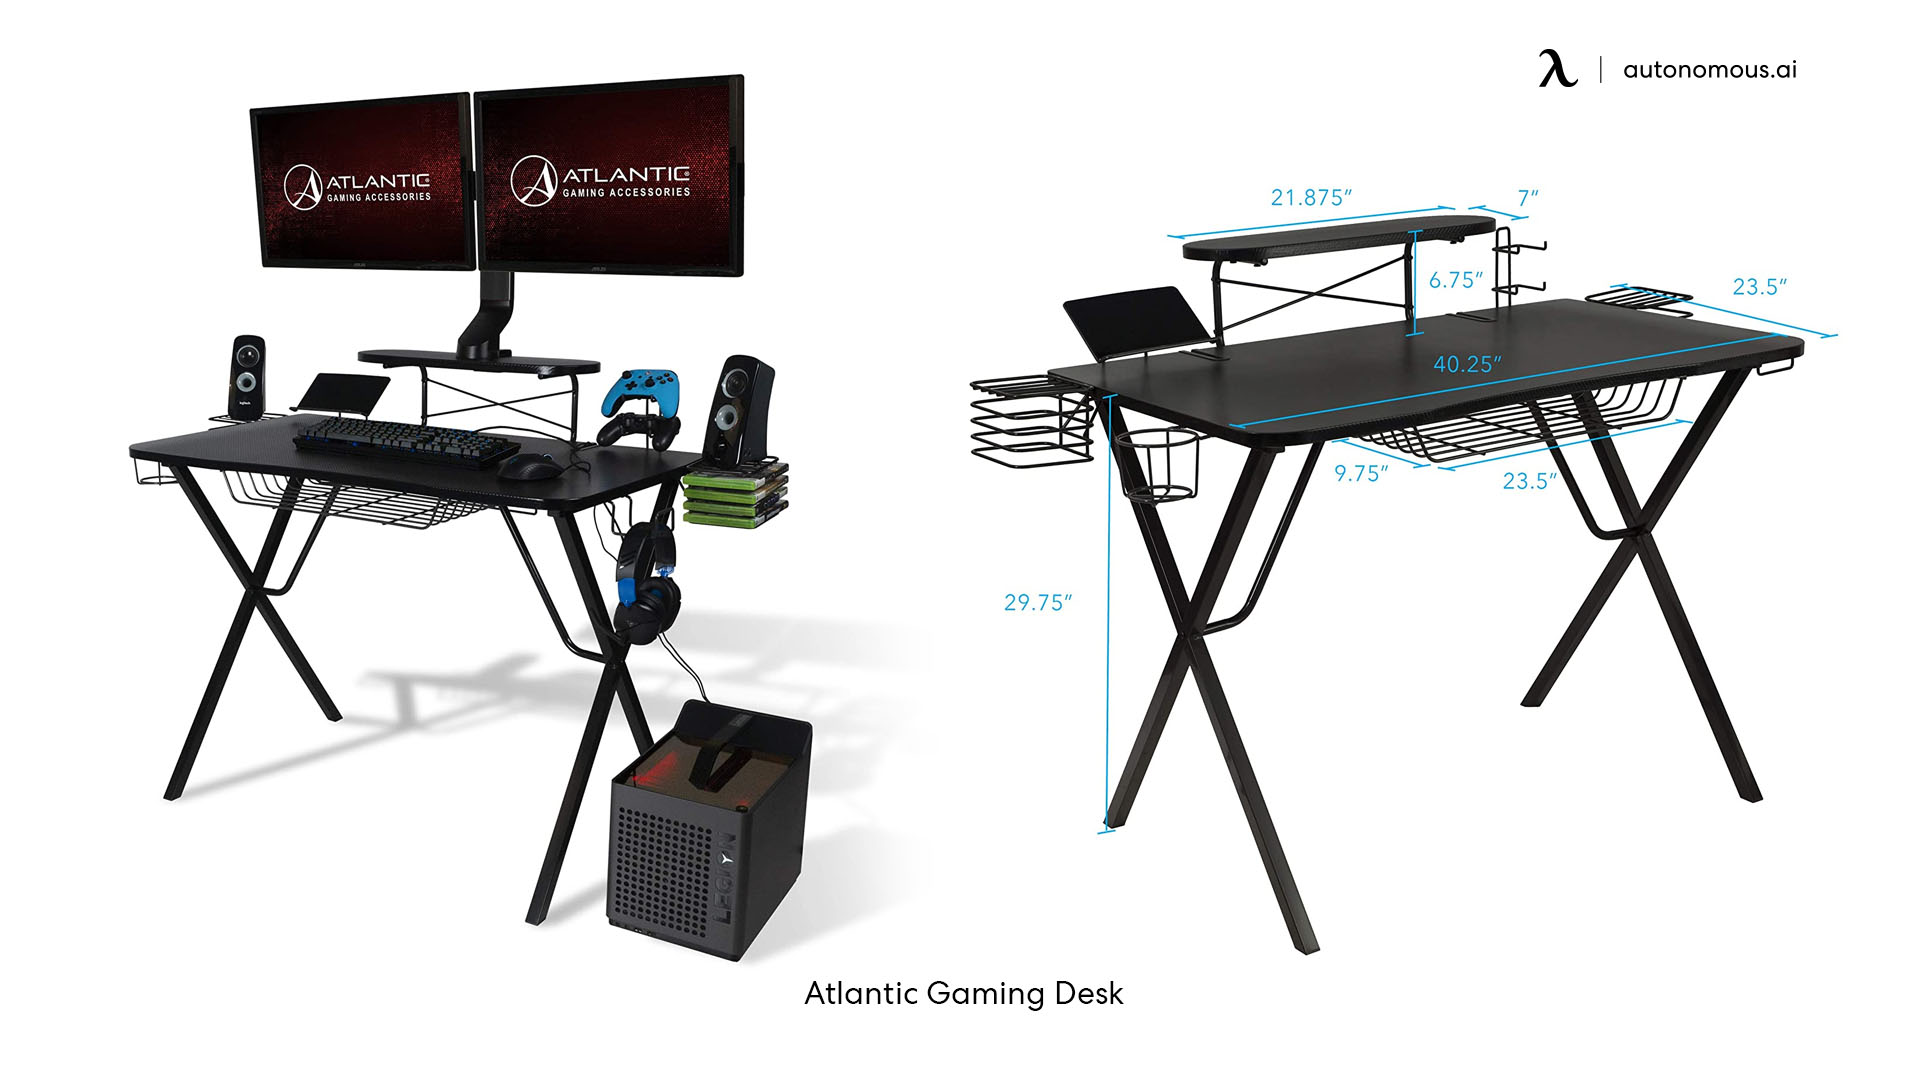 PS4 gaming desk by Atlantic